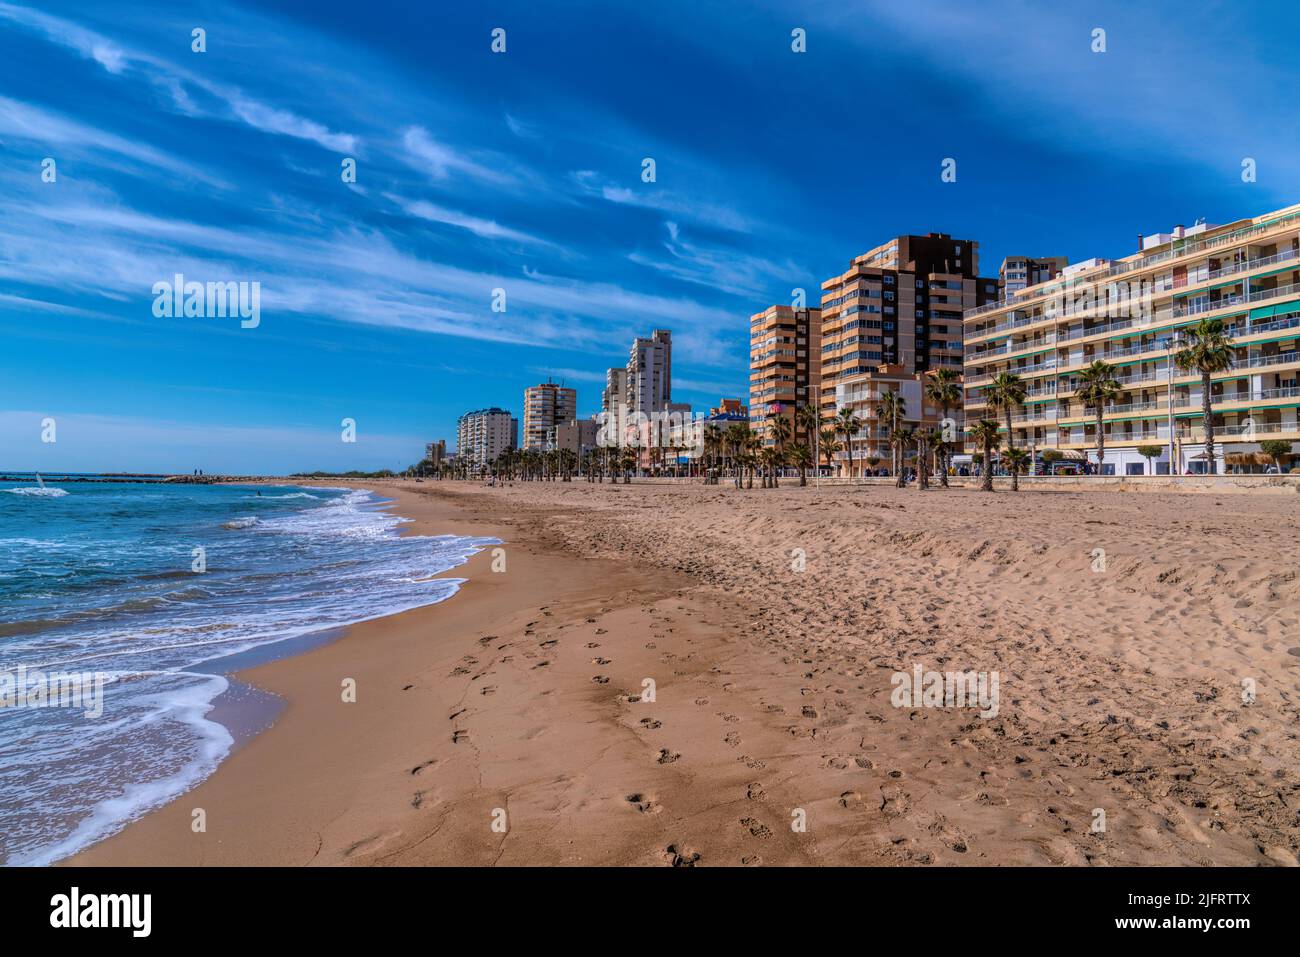 El Campello Spain sandy beach Costa Blanca near Benidorm and Alicante blue sea Stock Photo